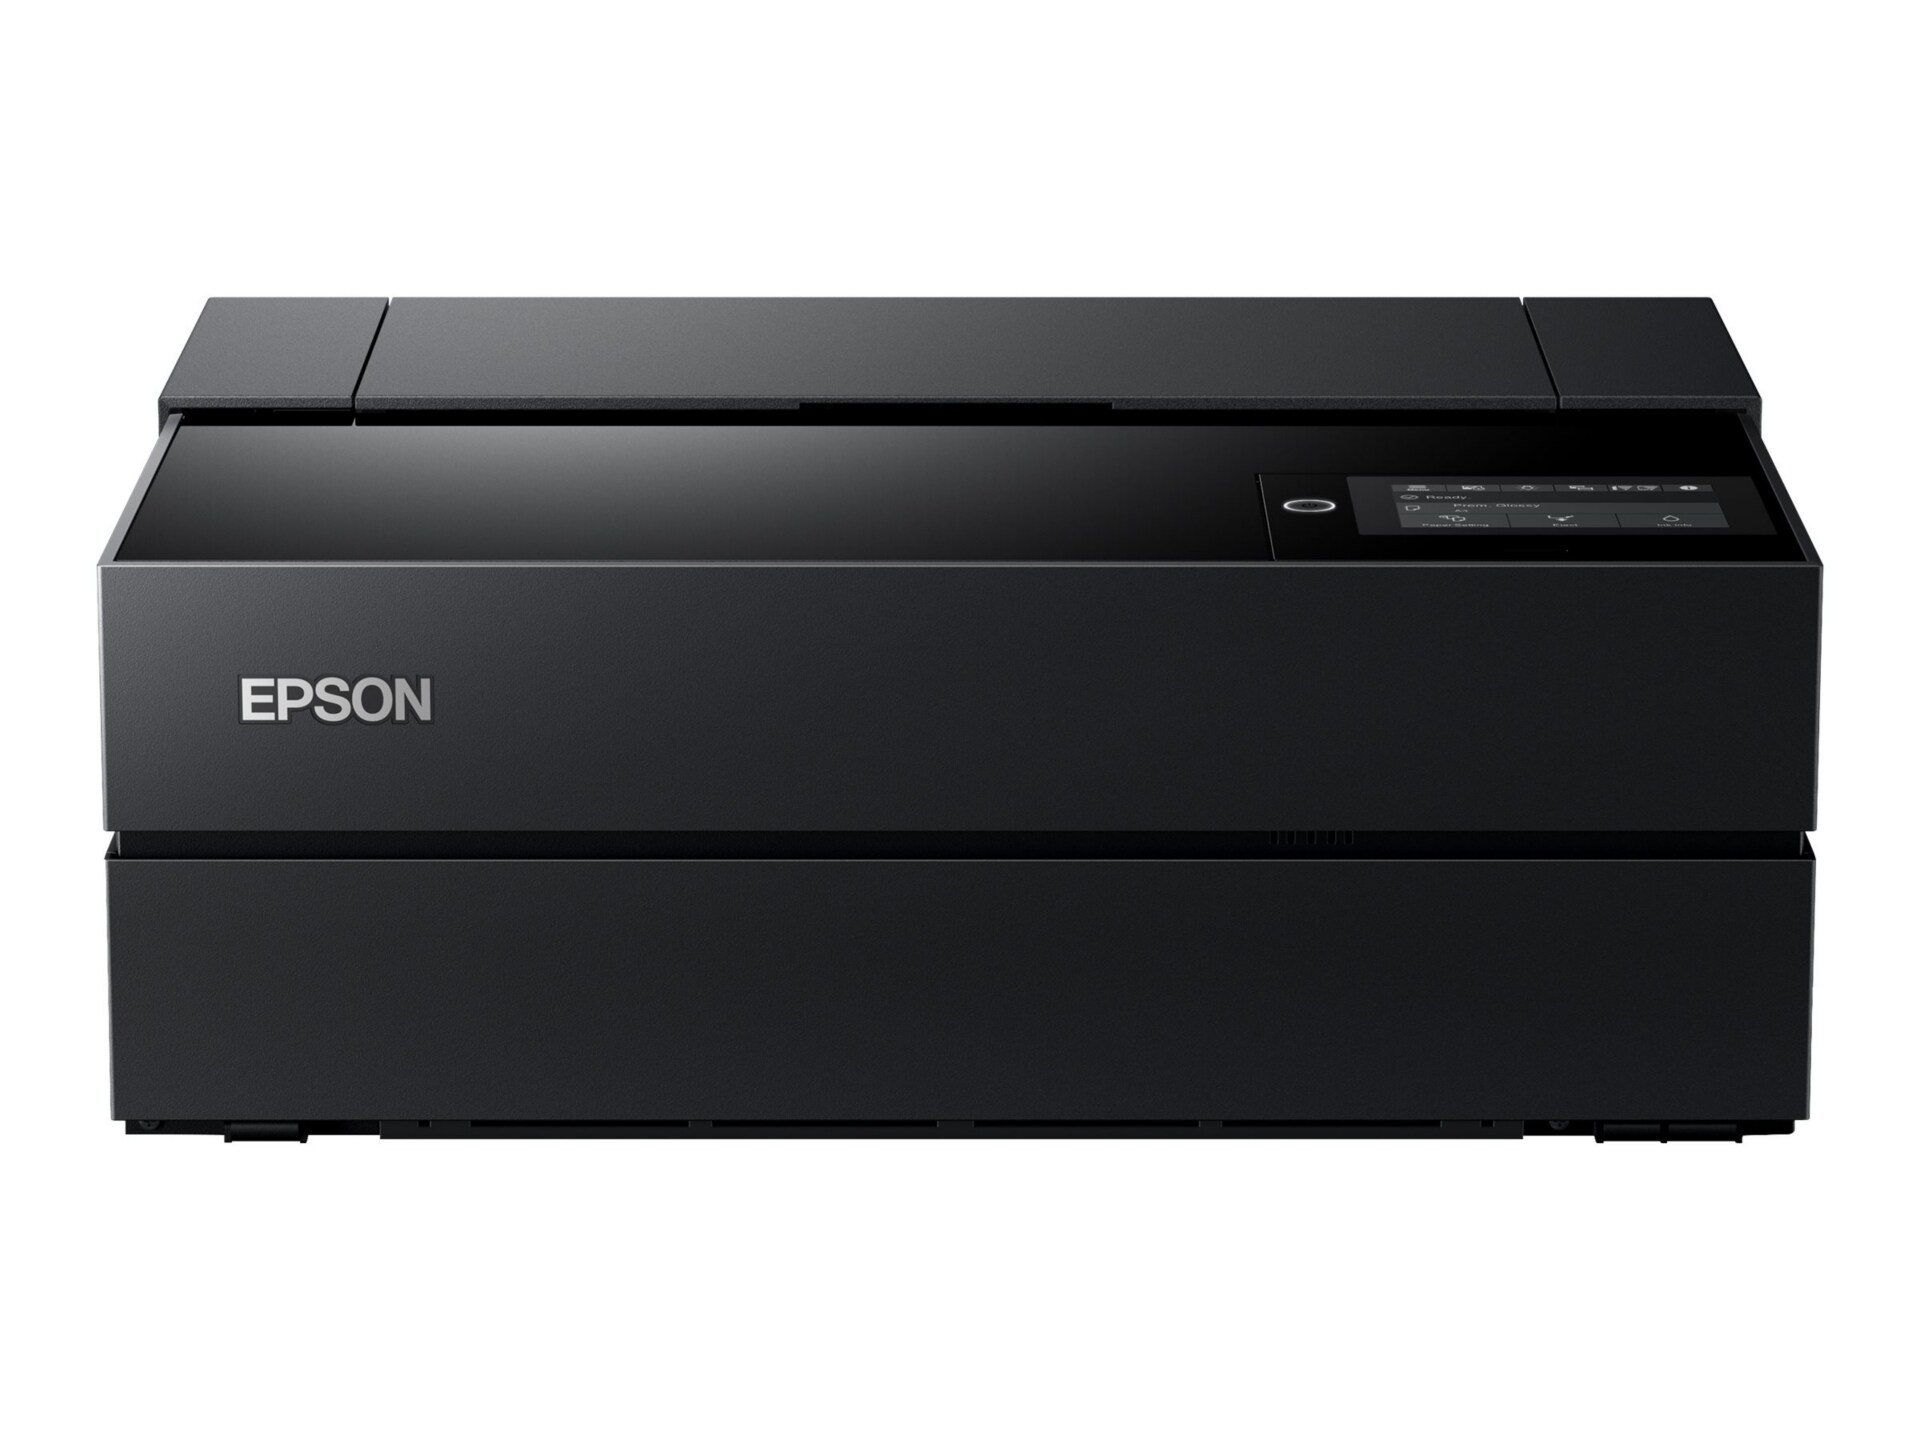 Epson SureColor P700 - large-format printer - color - ink-jet